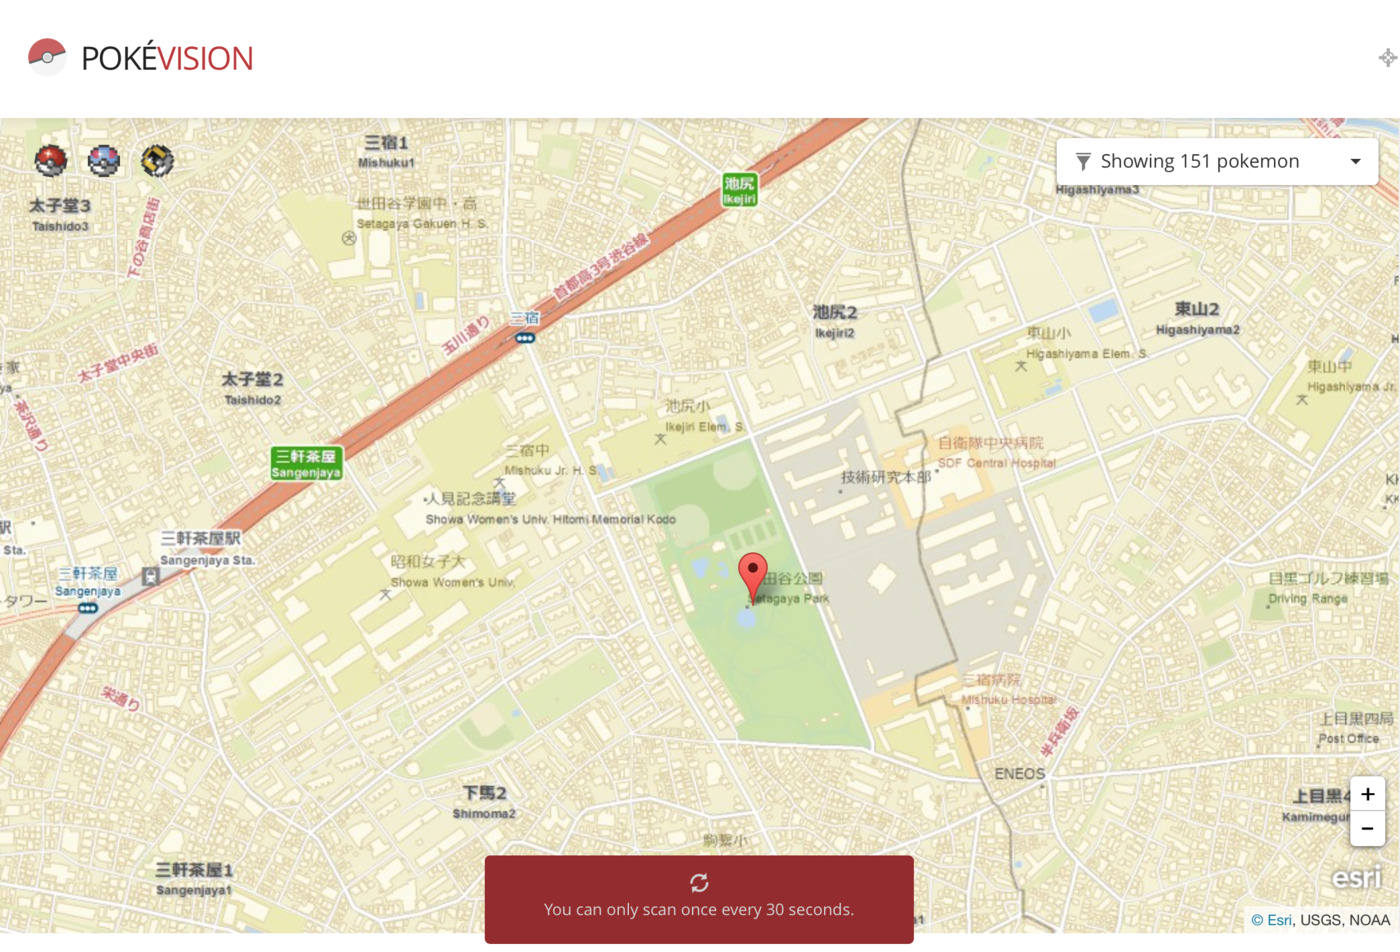 pokevision-pokemongo-map-403-accessed-denied-00001